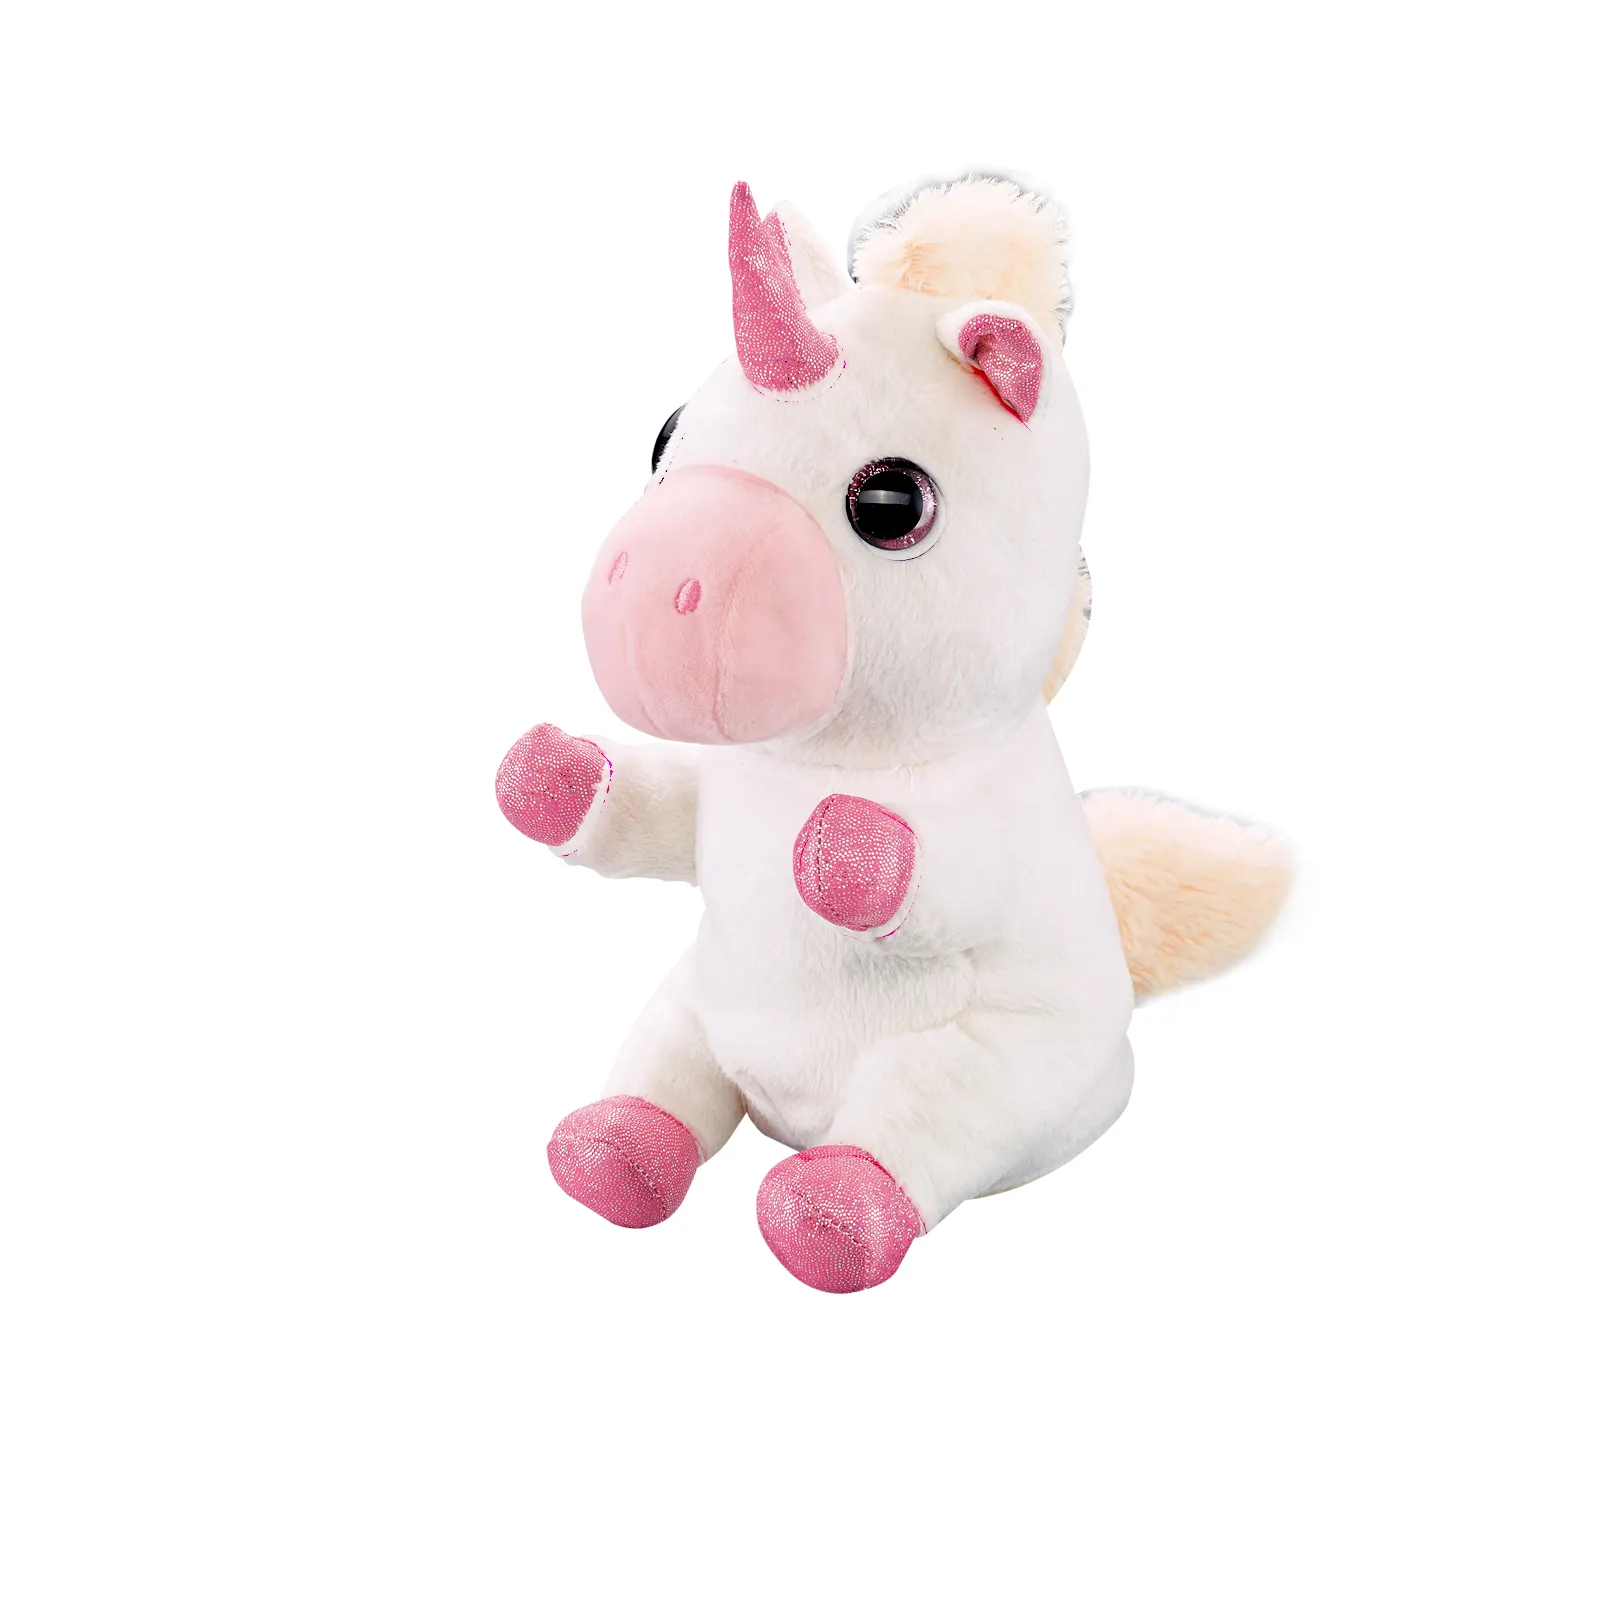 New Fantacy Toys Amazon Best Seller Plush Unicorn Dancing and Singing Toy